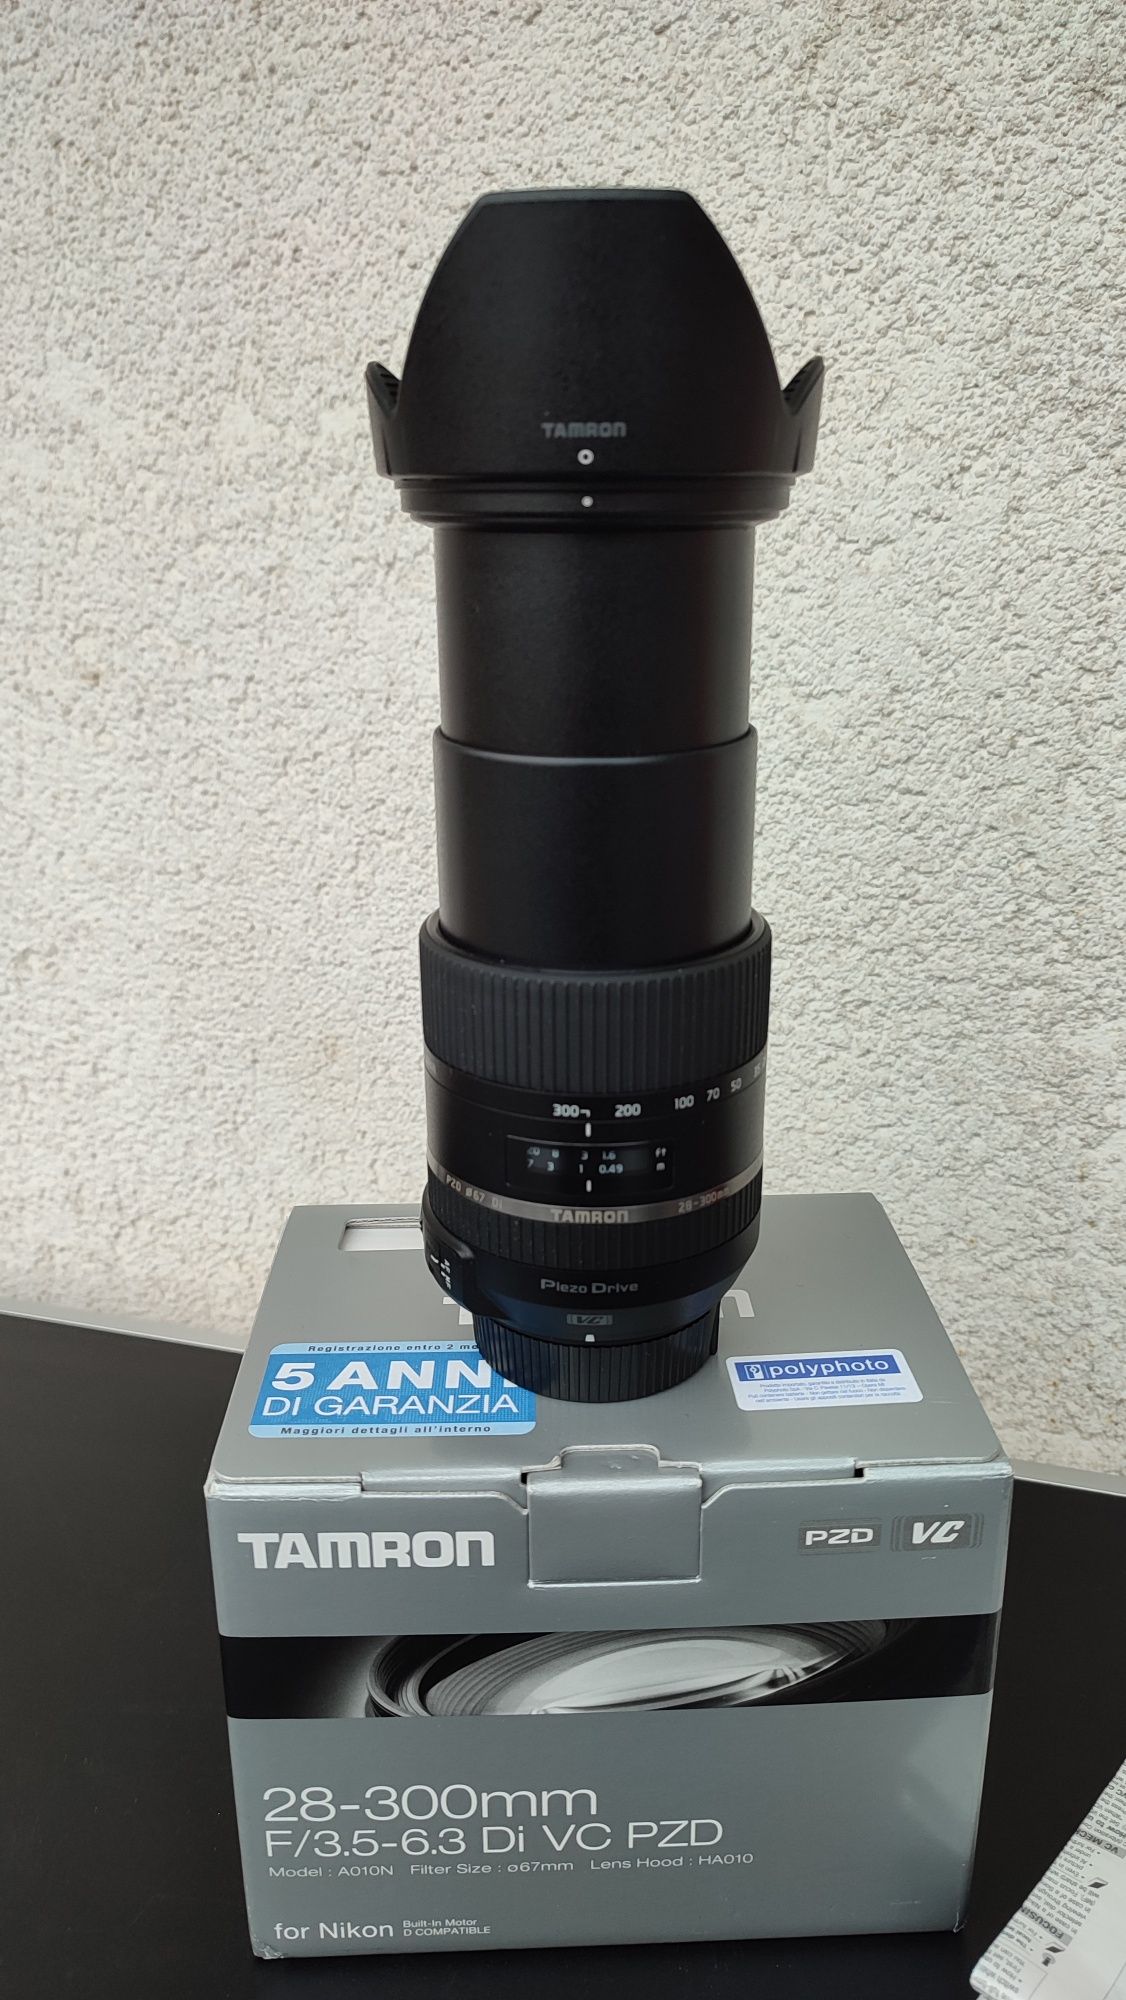 obiectiv tamron pzd vc 28 - 300 mm full frame Nikon

PZD VC

28-300mm